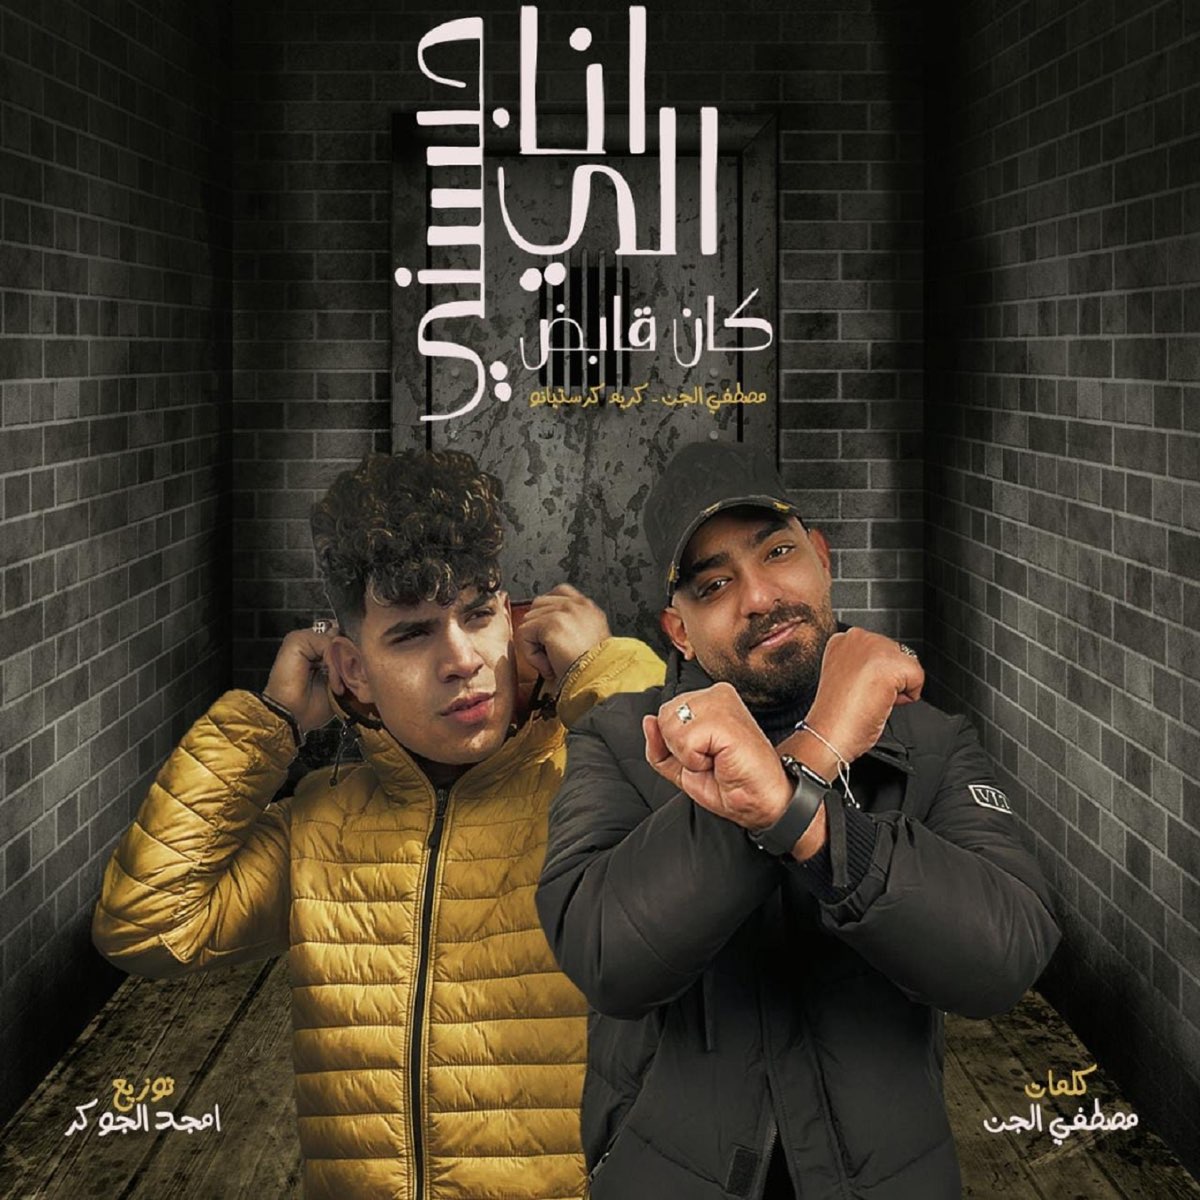 انا اللى حبسنى كان قابض (feat. Karim Cristiano) - Single - Album by مصطفي  الجن - Apple Music